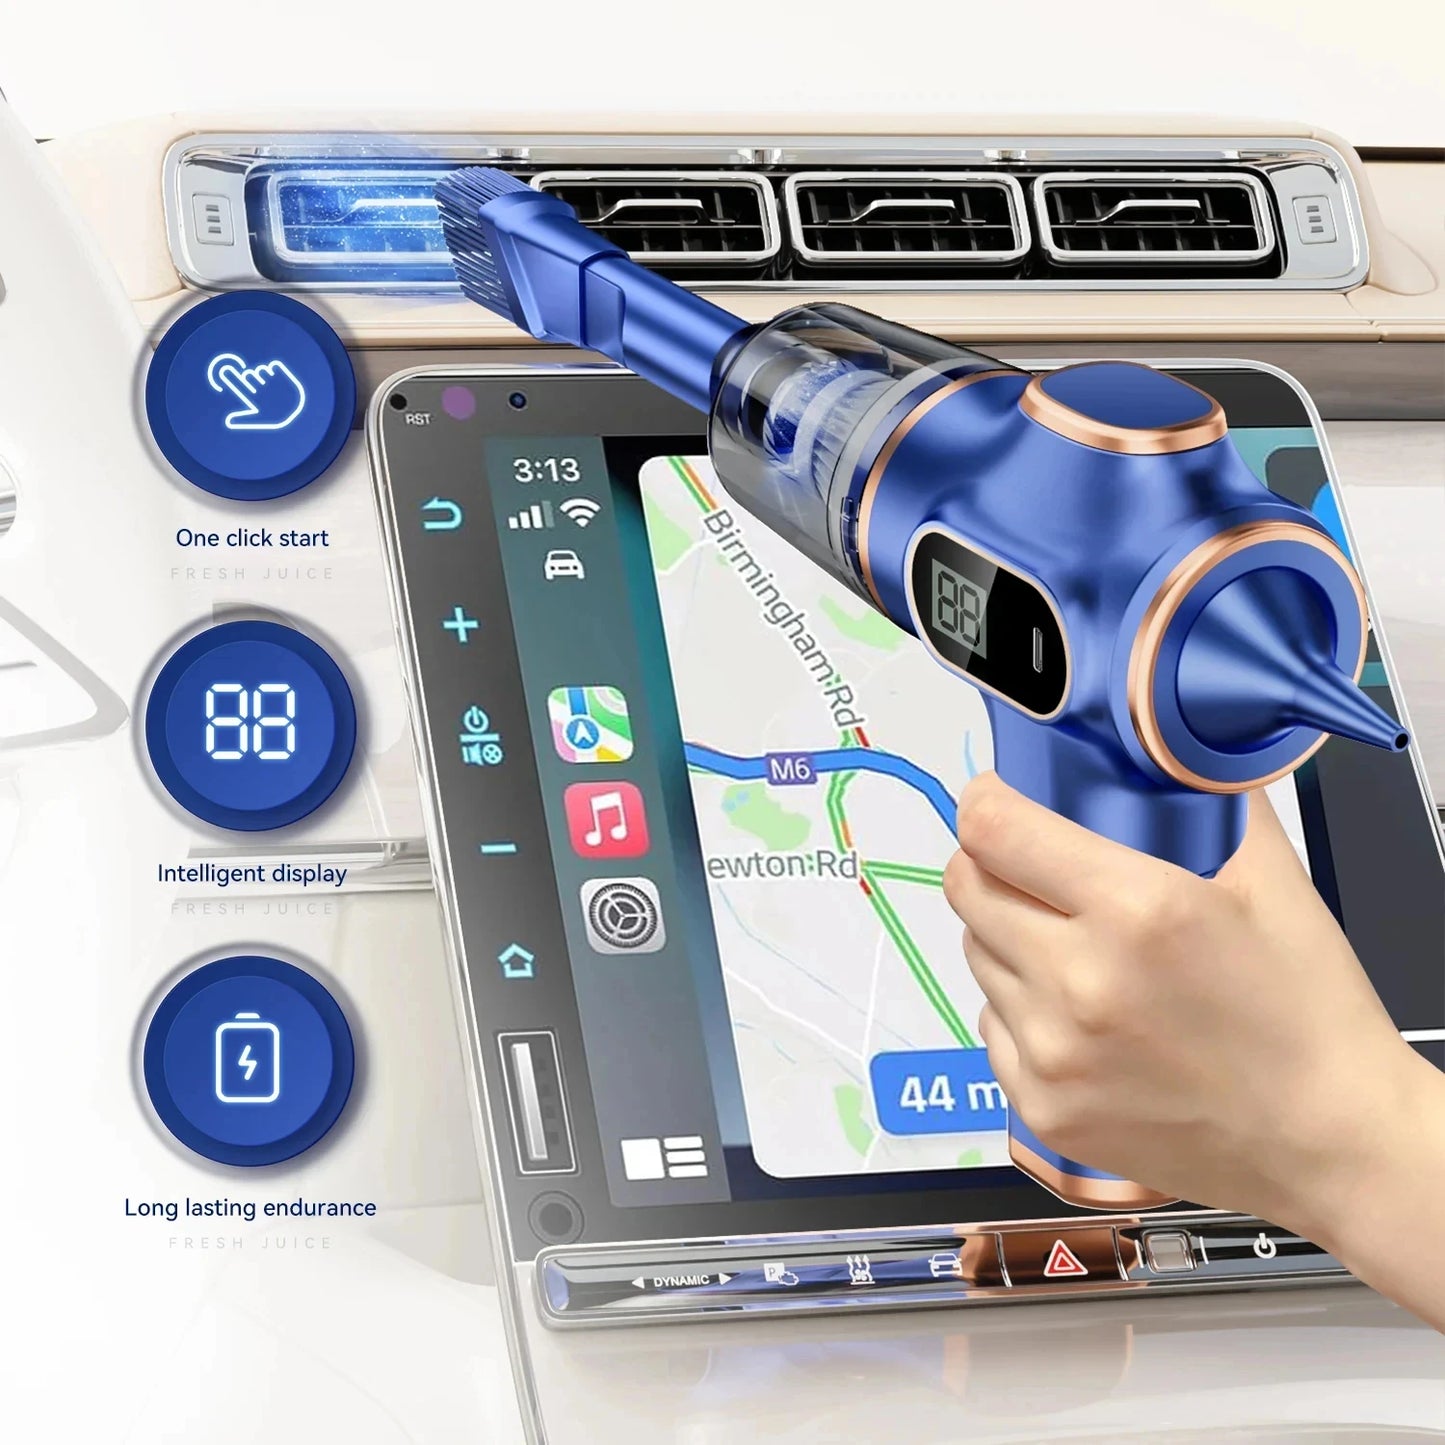 Xiaomi MIJIA 9500000Pa 5 in1 Wireless Automobile Vacuum Cleaner Portable Vacuum Cleaner